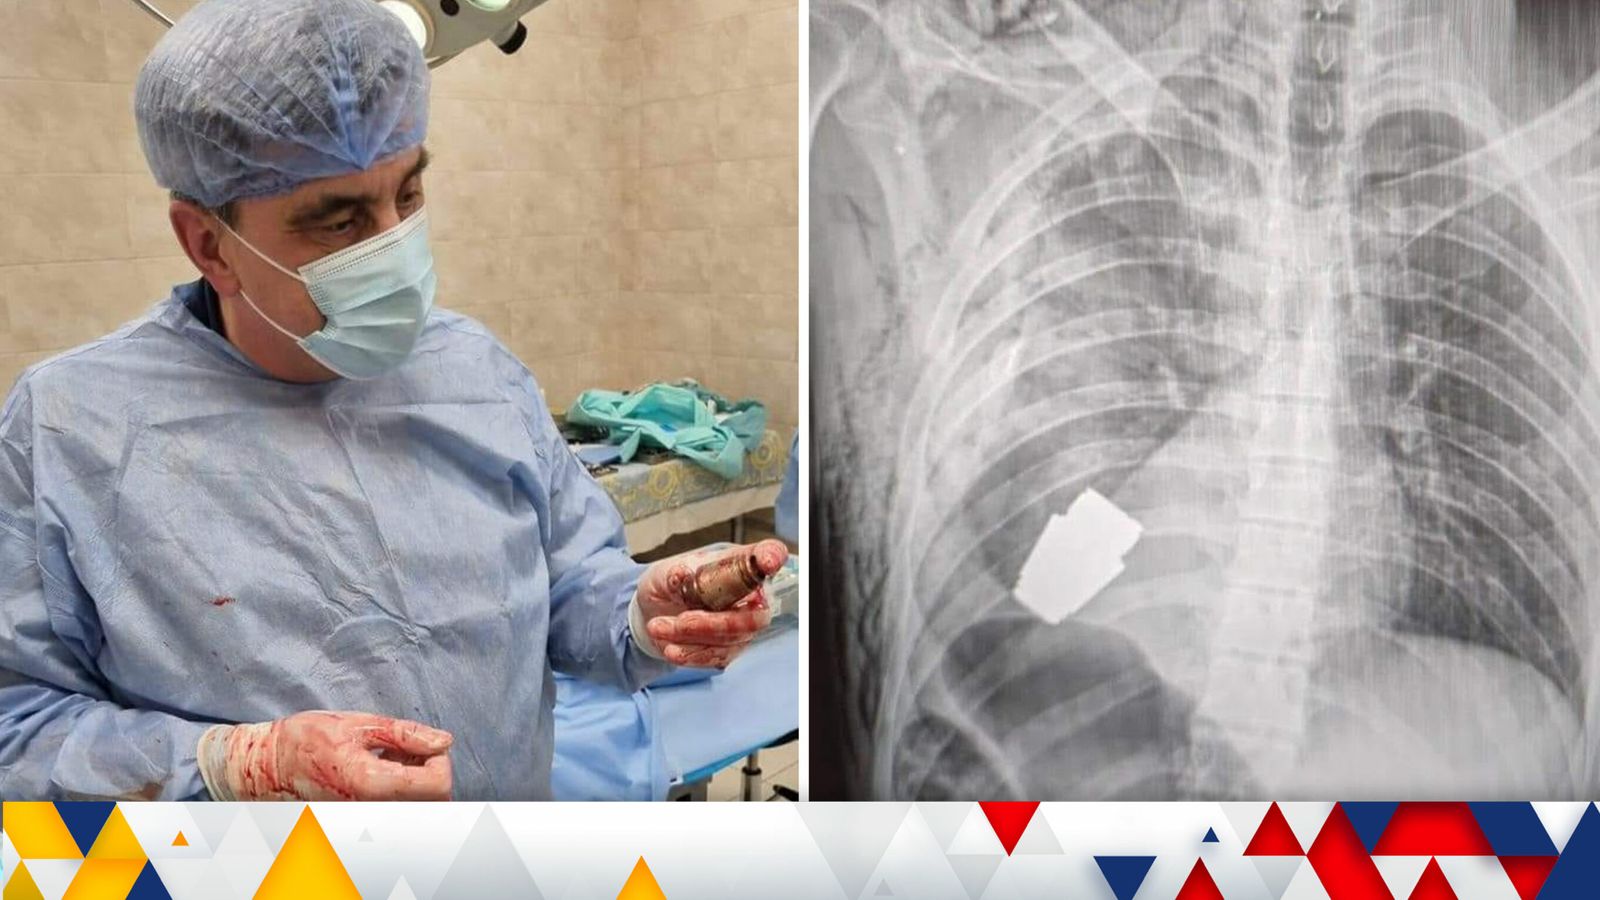 Ukraine war: Surgeon removes 'live grenade' from inside soldier's body